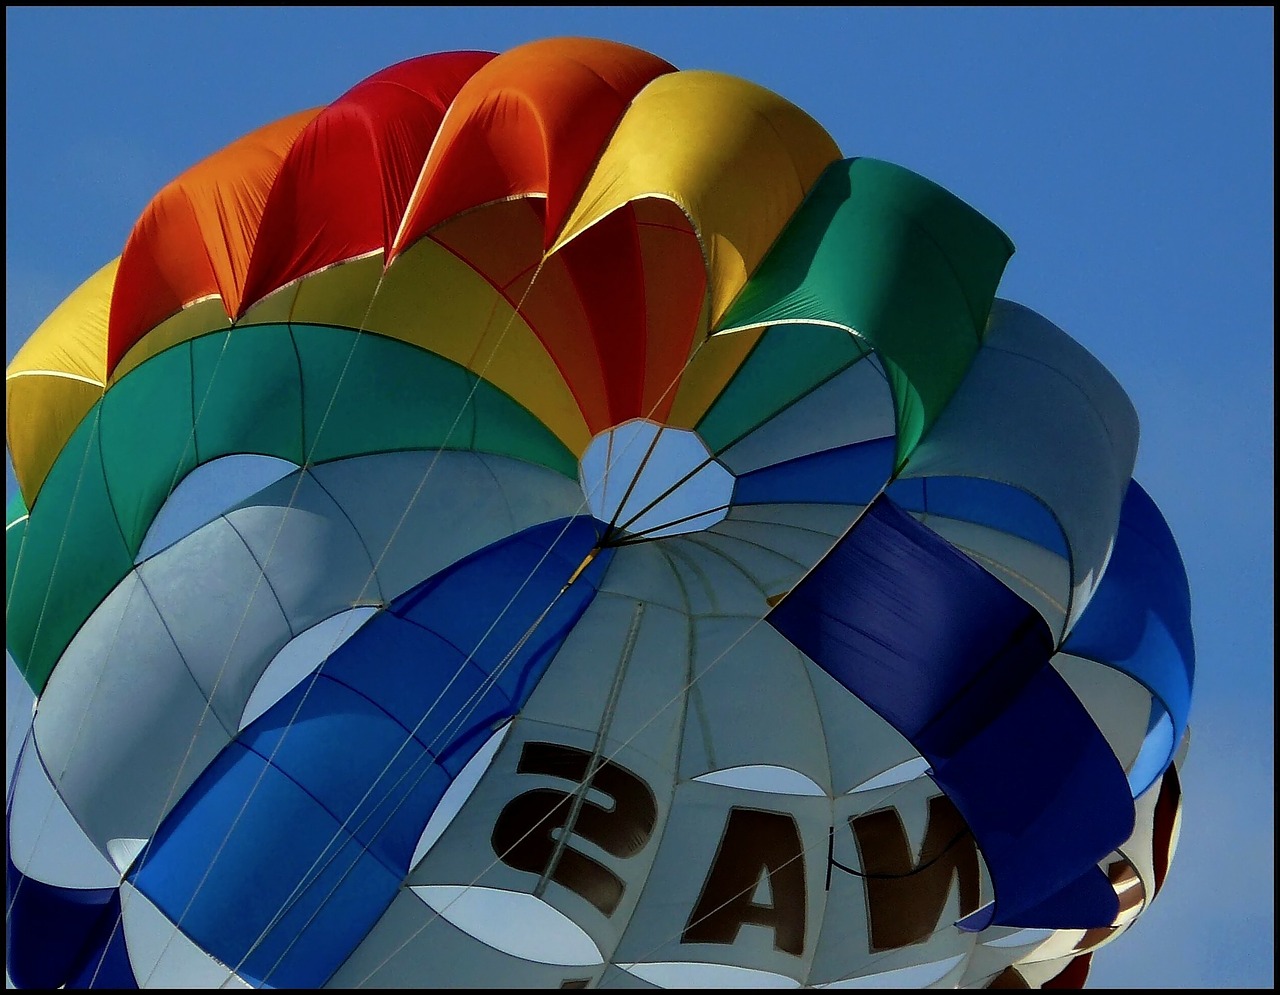 Colorful close up of parachuete.